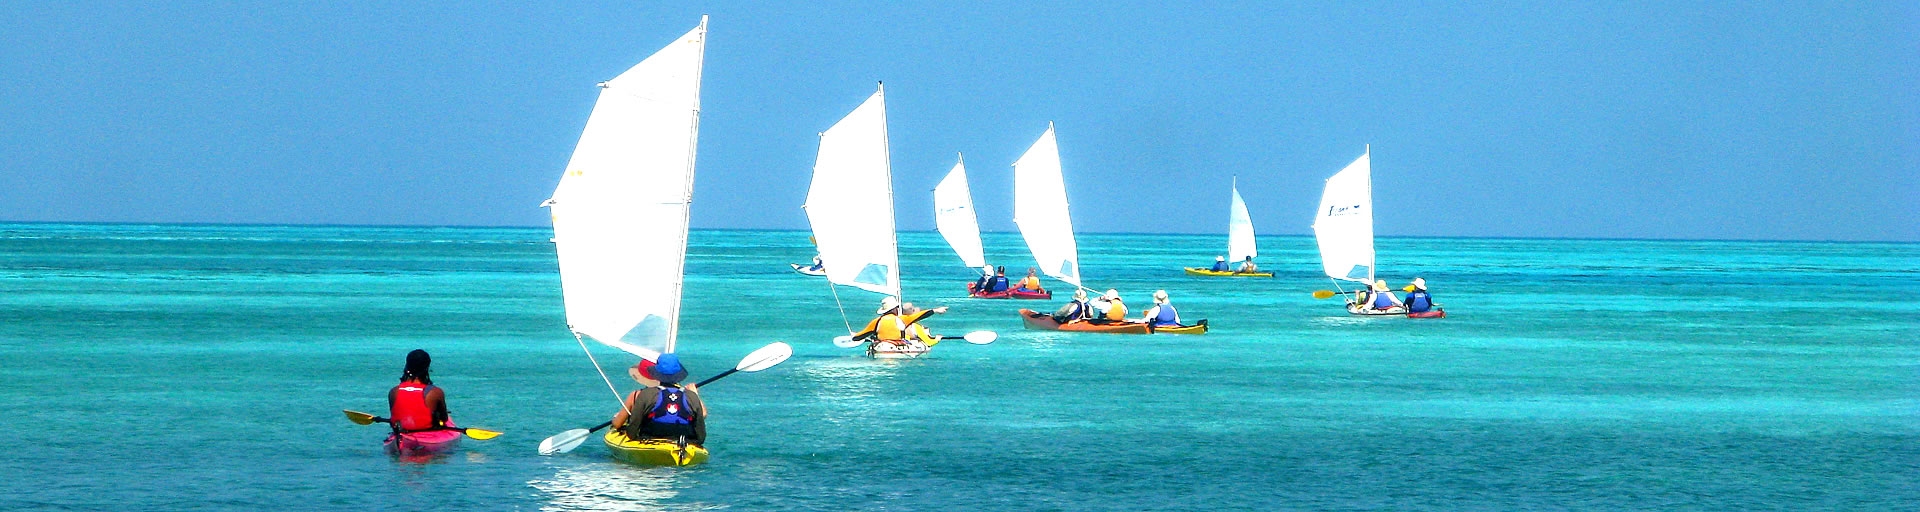 Kayak Sailing Belize Barrier Reef